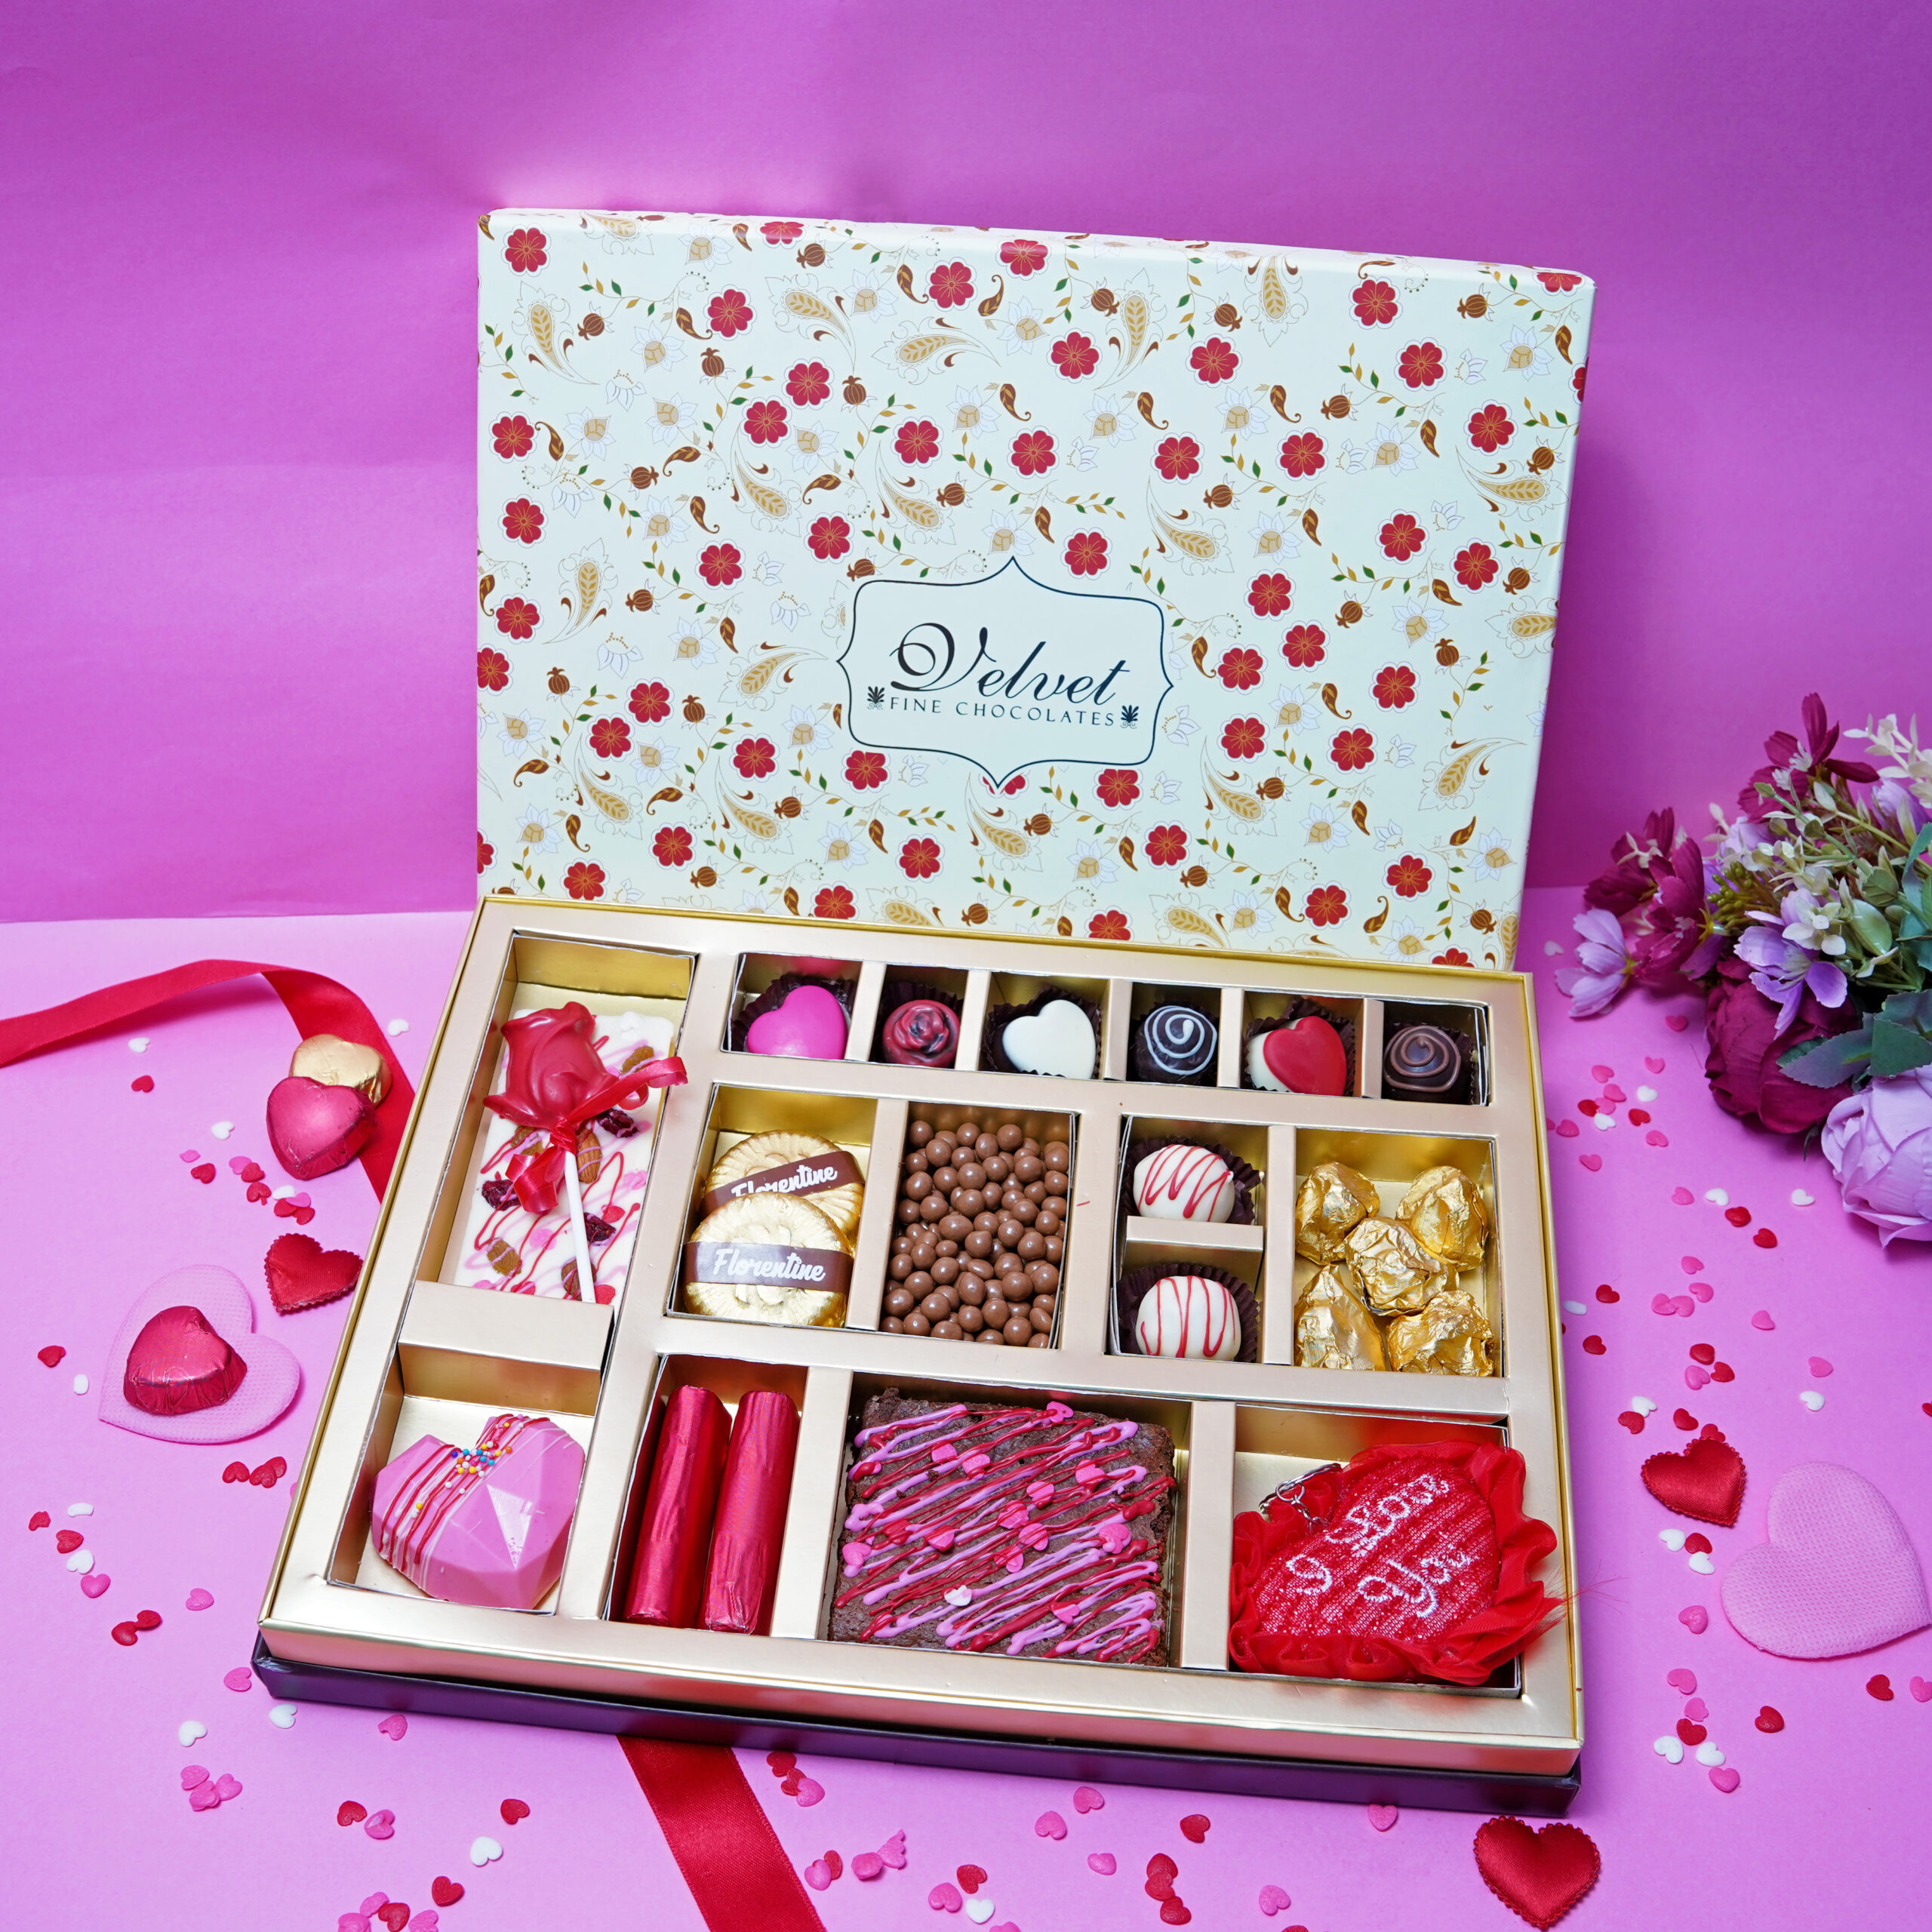 Love Confections Box Valentine Gift Pack - Velvet fine chocolates